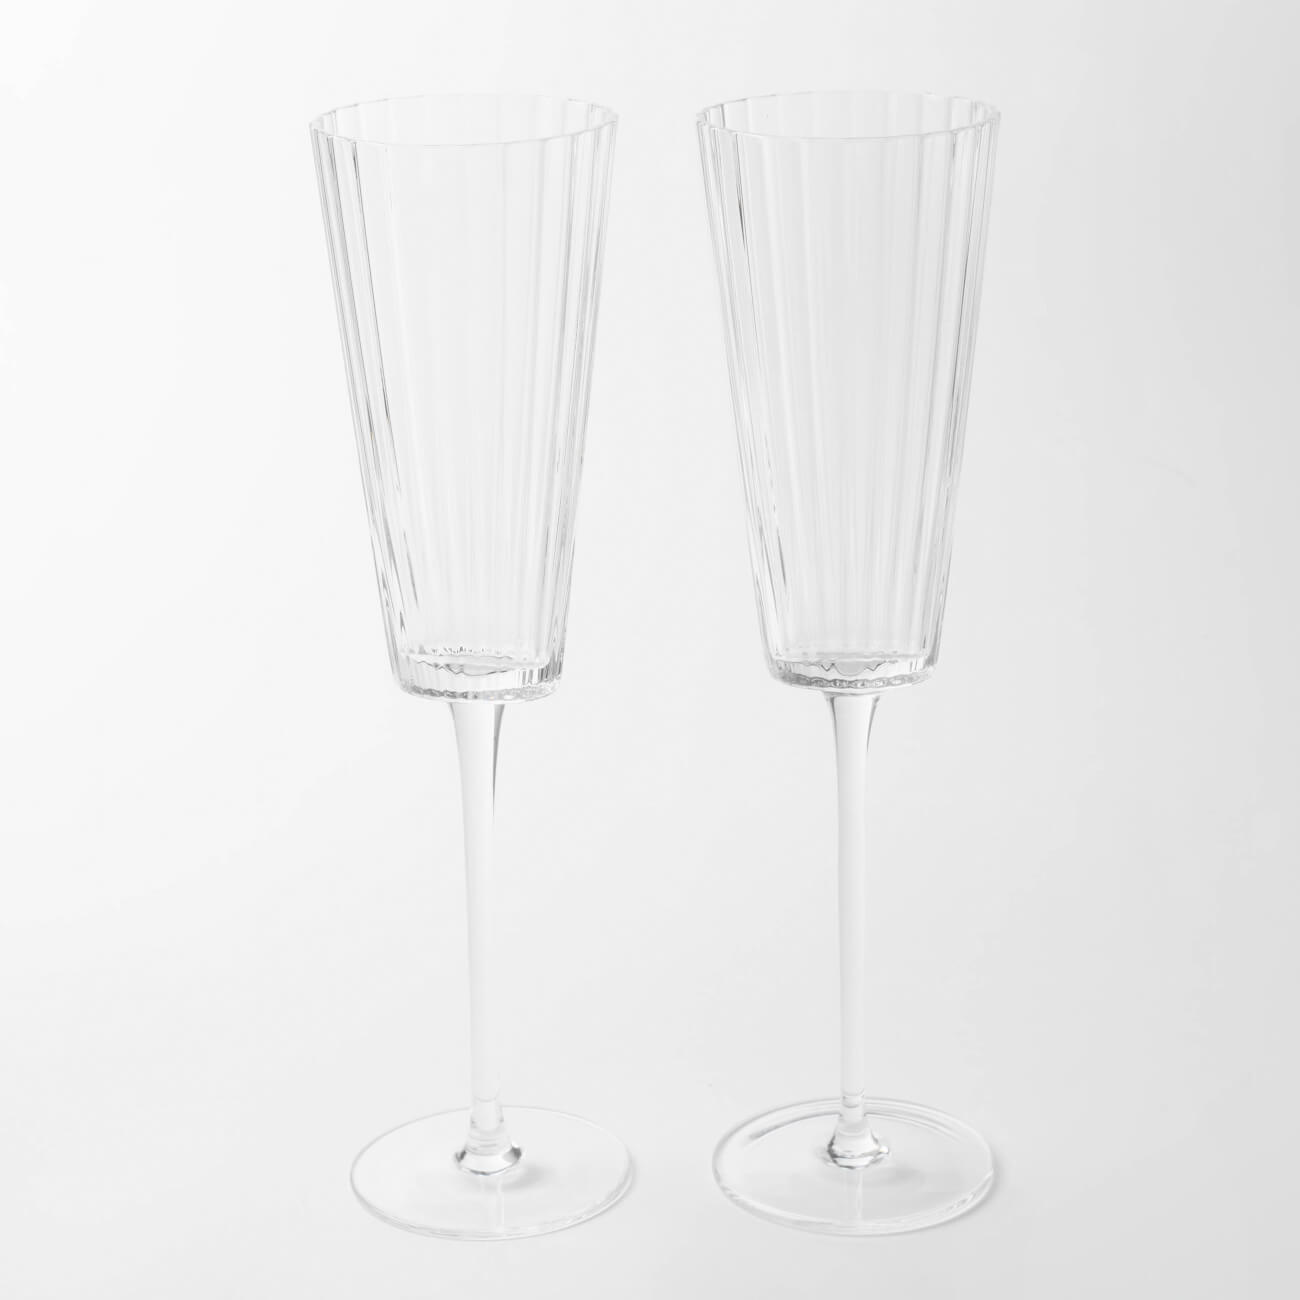 Бокал для шампанского, 230 мл, 2 шт, стекло, Palagoni R